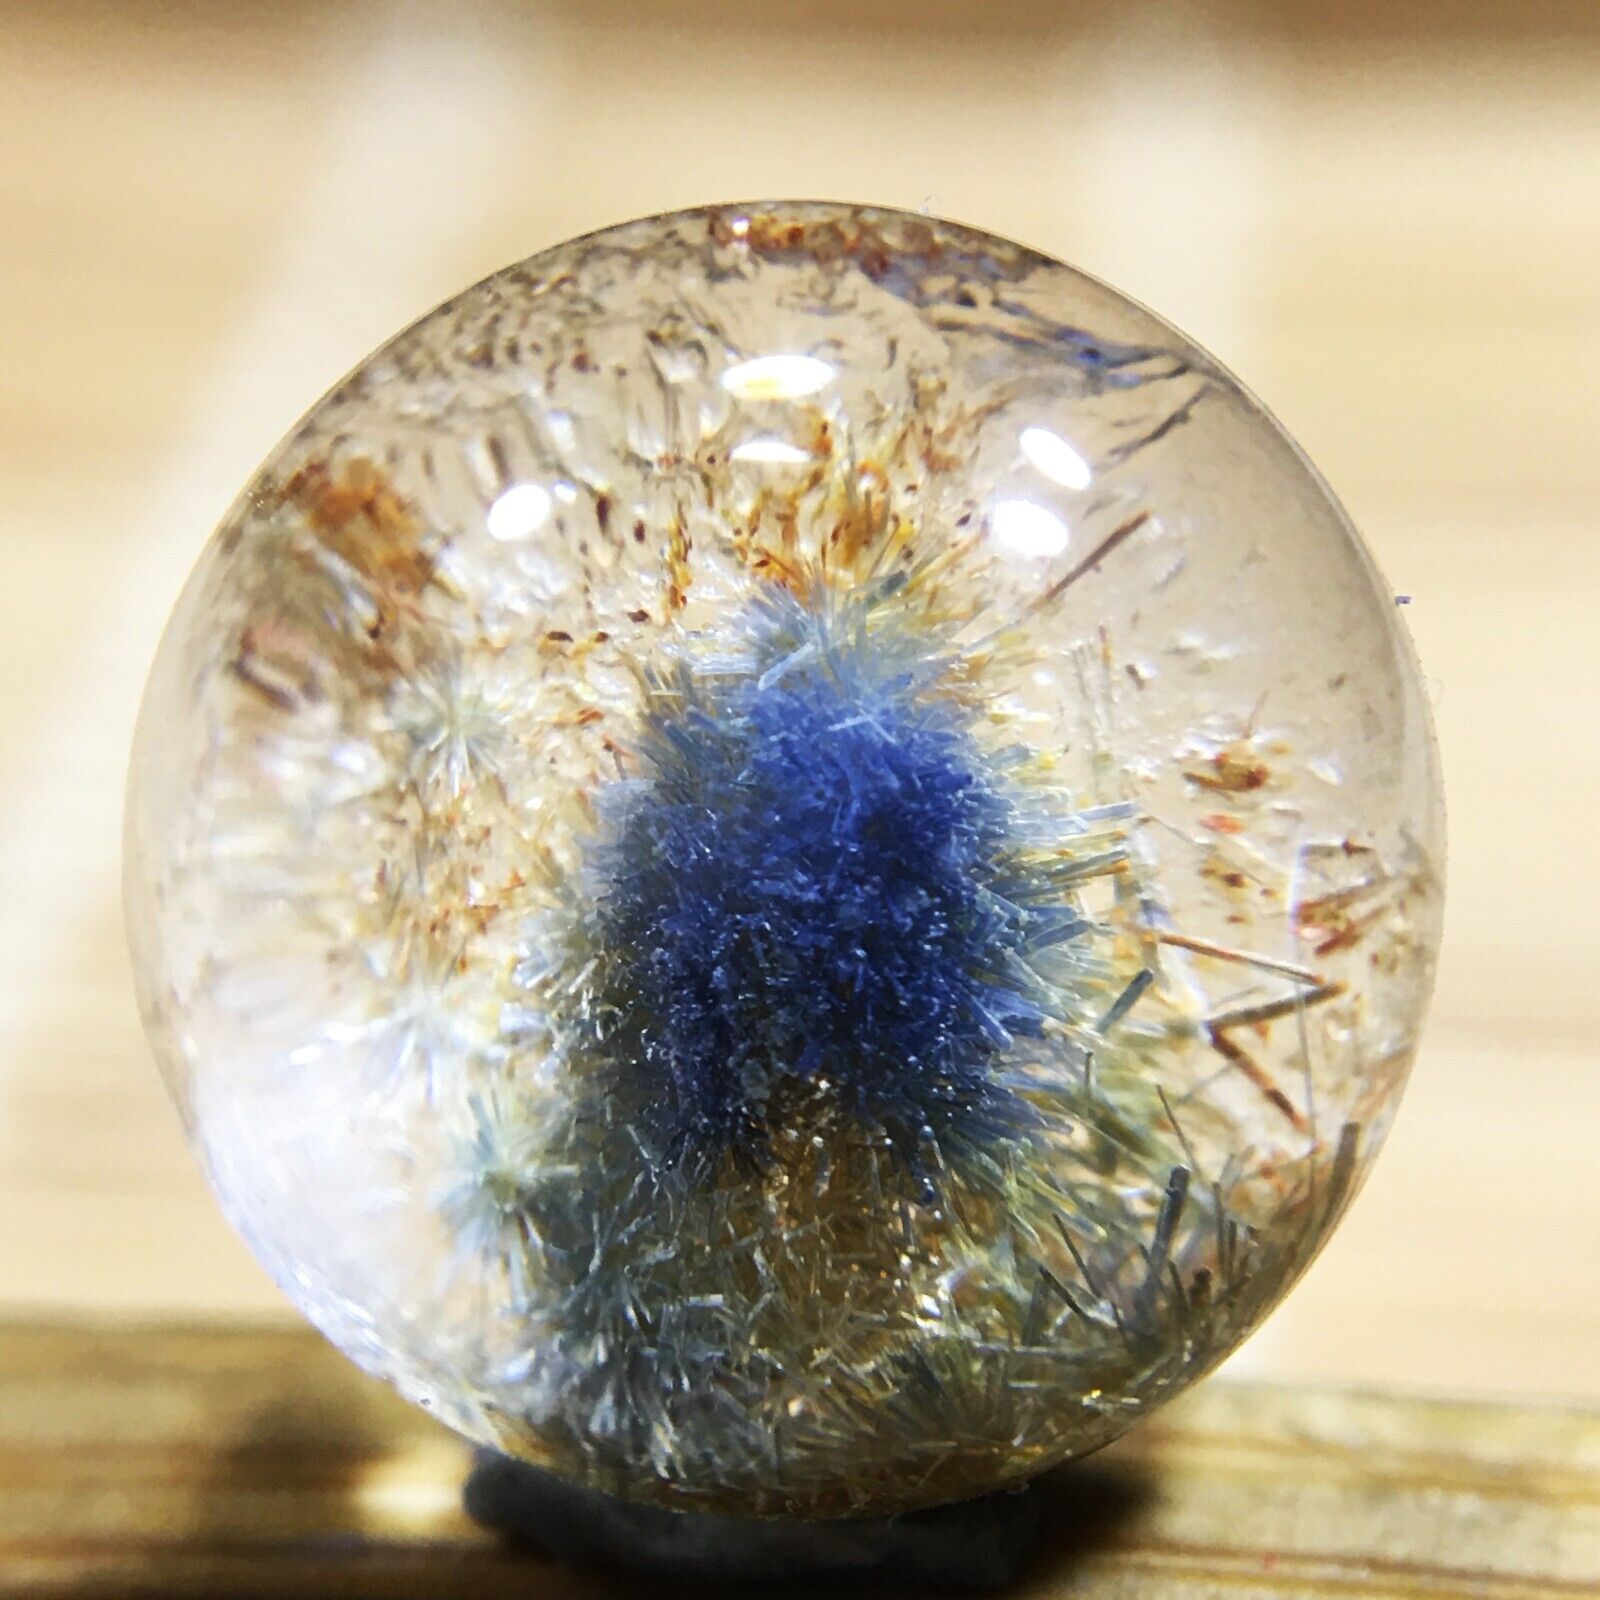 4.7Ct Very Rare NATURAL Beautiful Blue Dumortierite Quartz Crystal Pendant